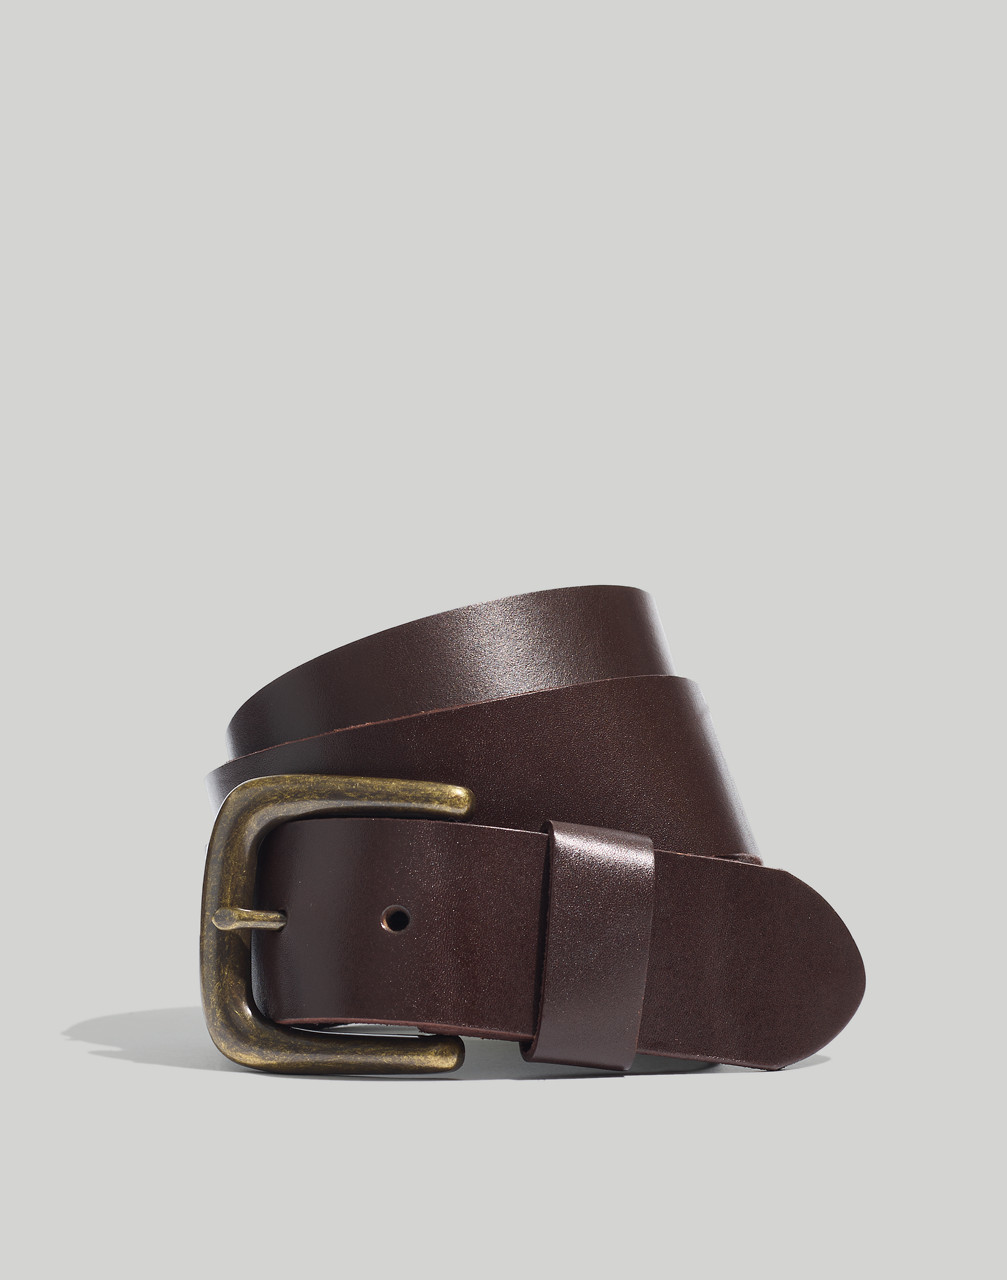 Mw Medium Leather Belt In Rich Brown